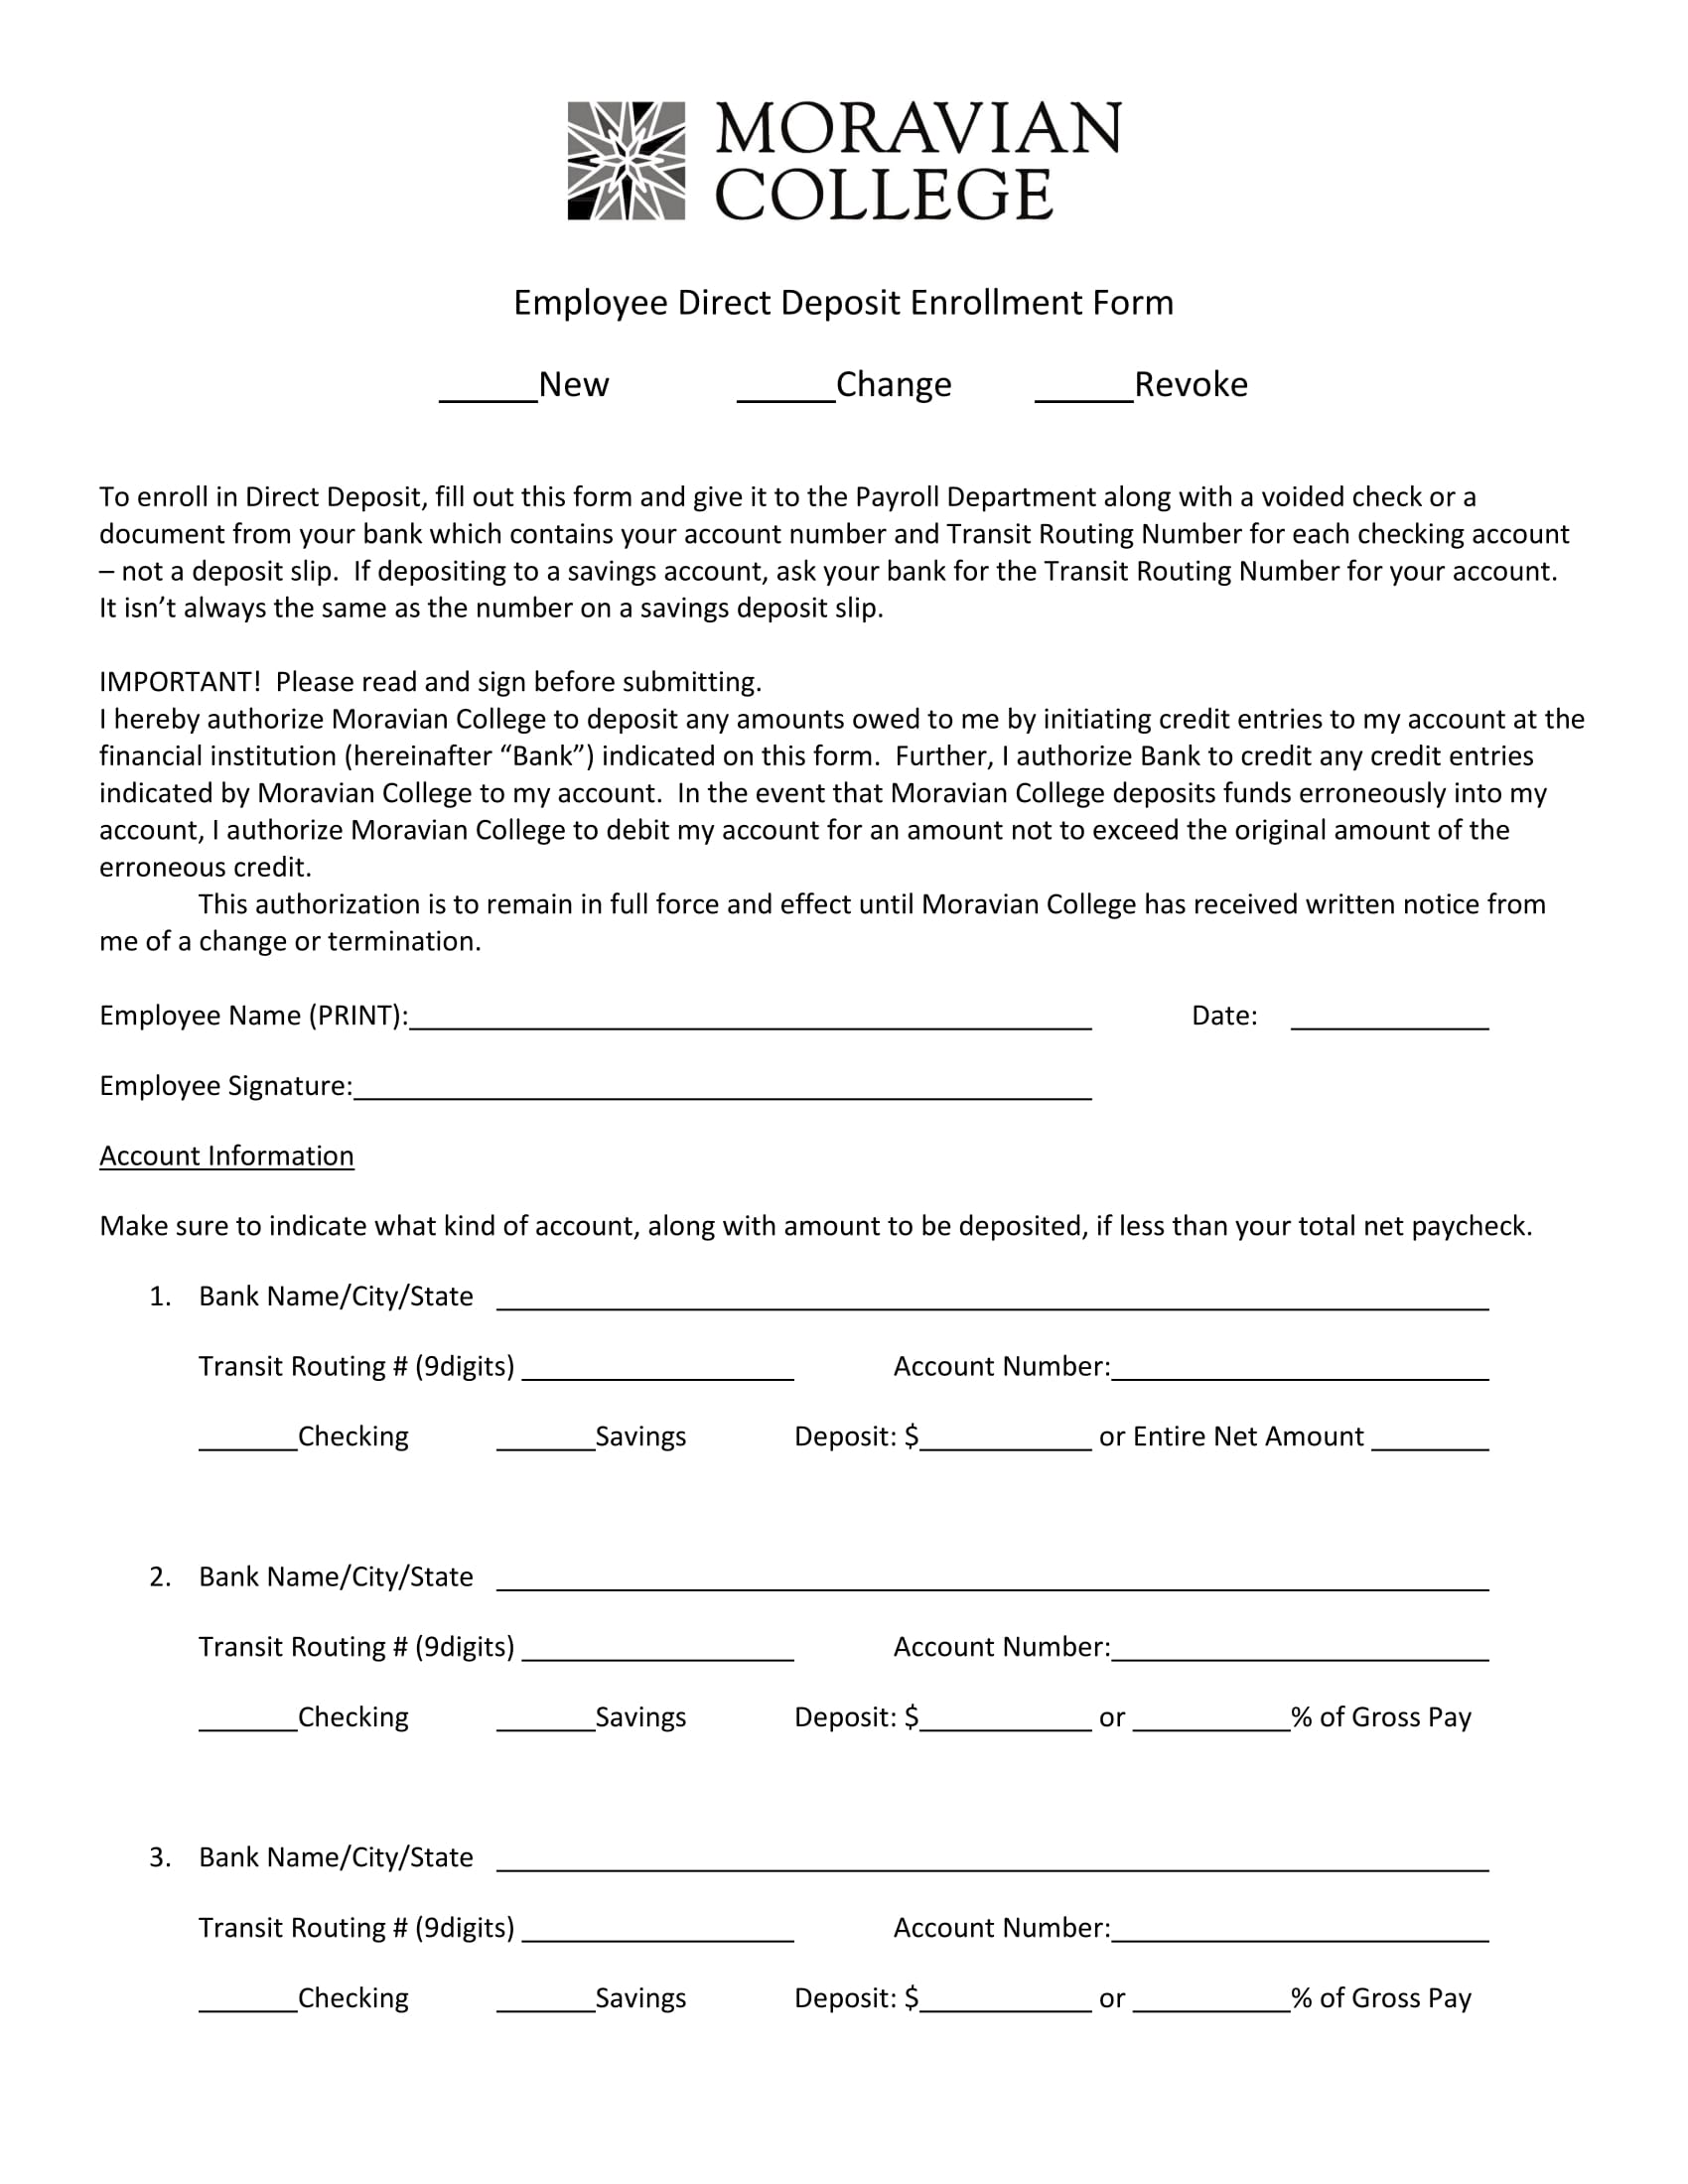 college employee direct deposit enrollment form 1